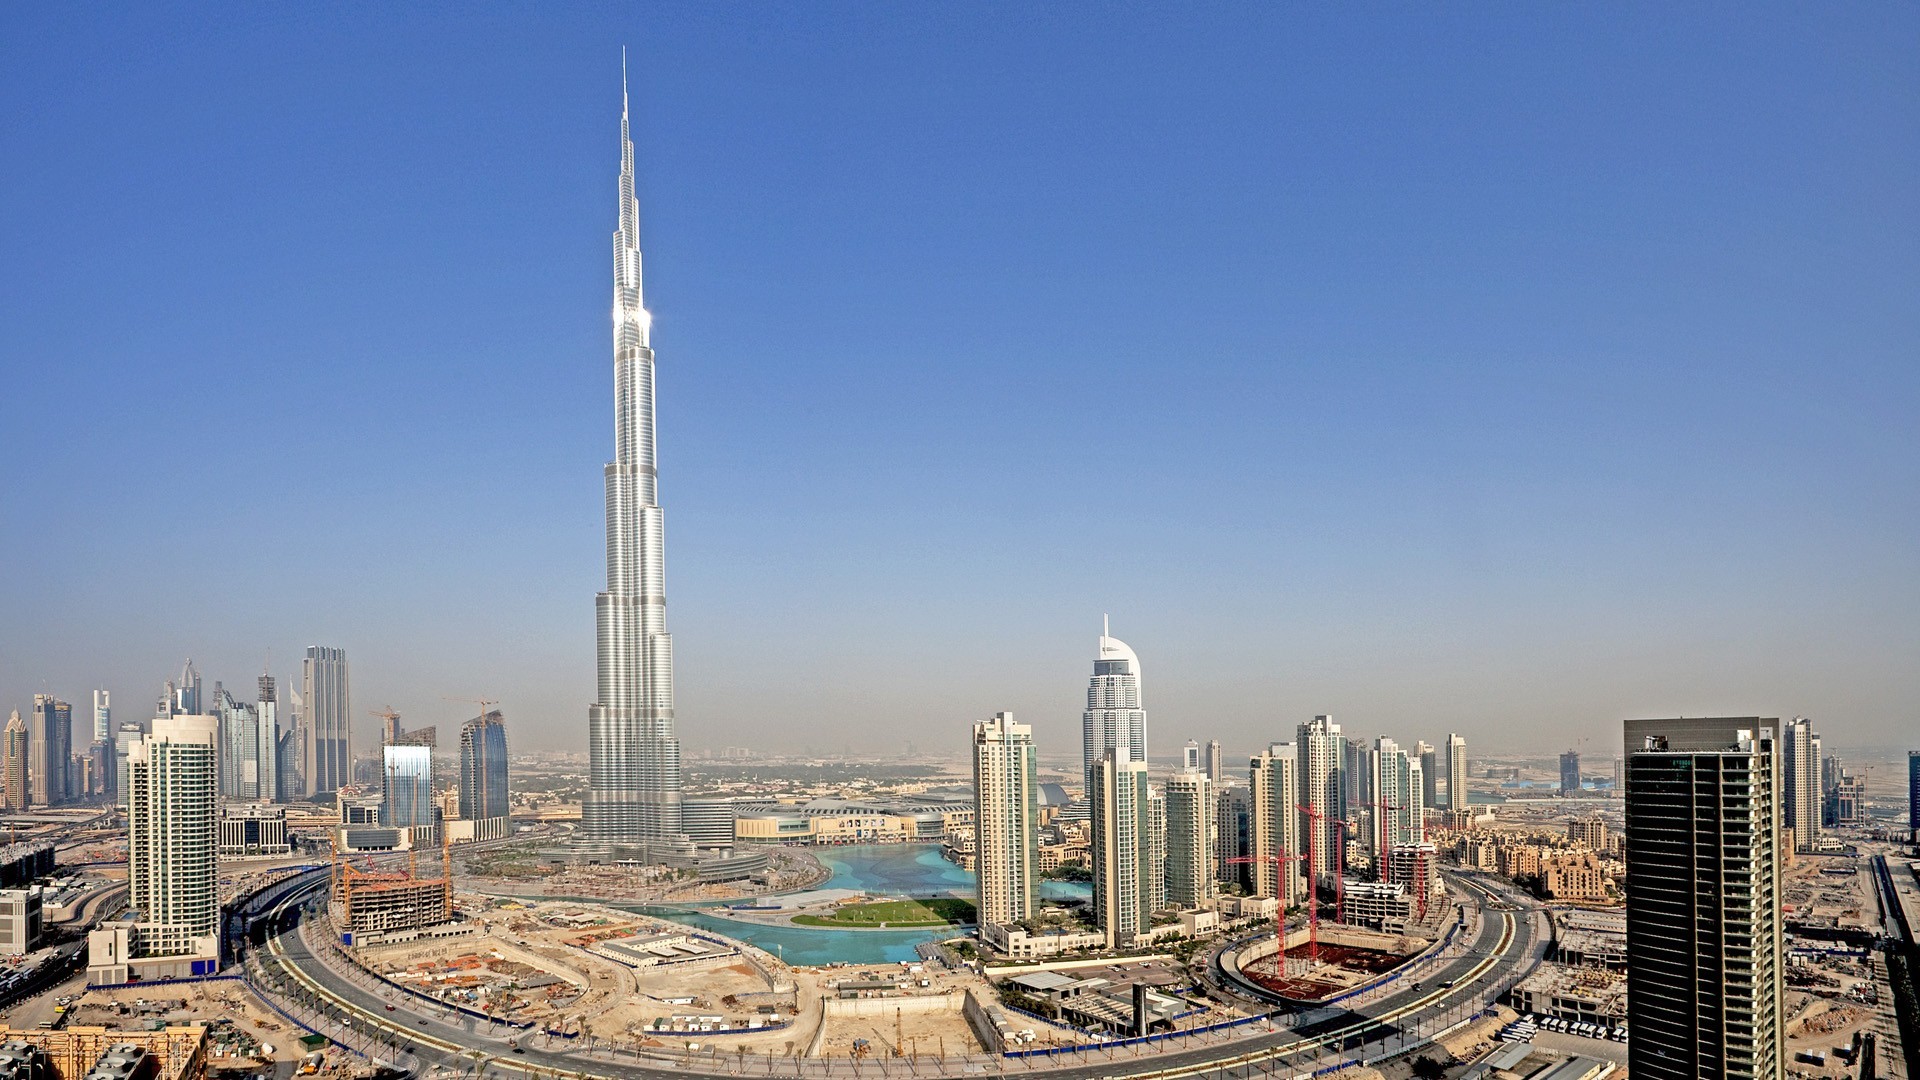 General 1920x1080 city building sky cityscape skyscraper Burj Al Arab hotel Dubai Asian Middle East landmark